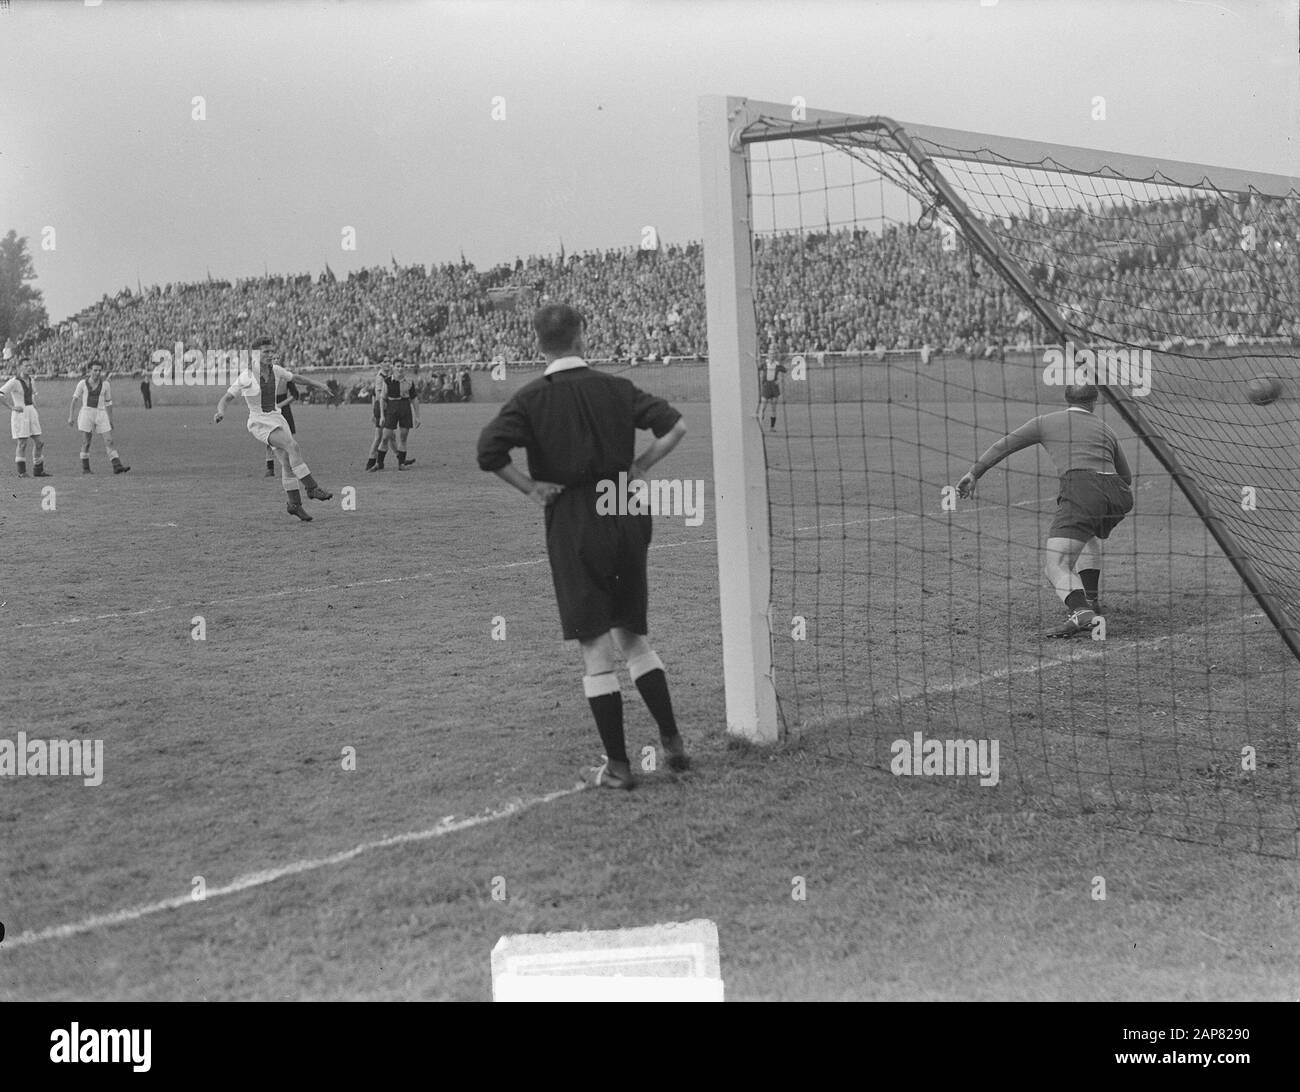 Ajax-Gooi 3-0 Date: 2 October 1949 Keywords: sport, football Stock Photo